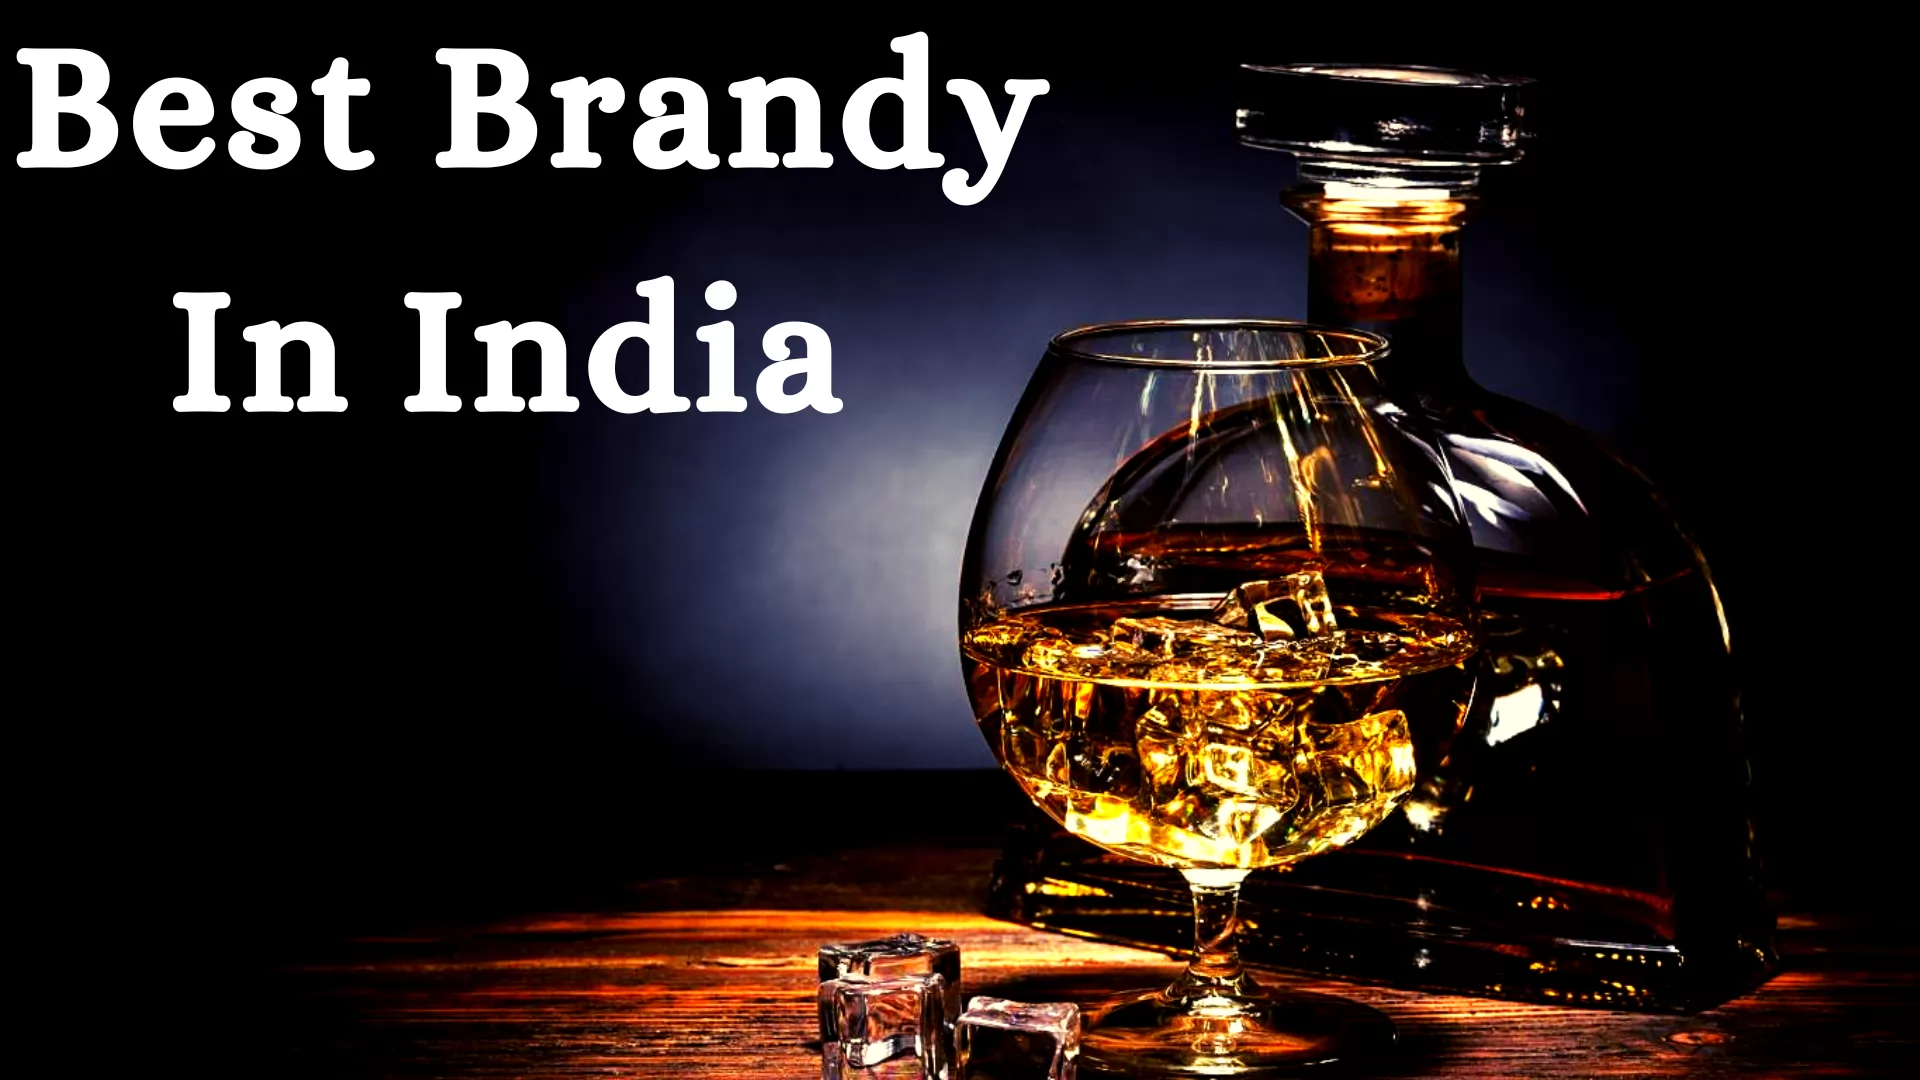 Best Brandy in India